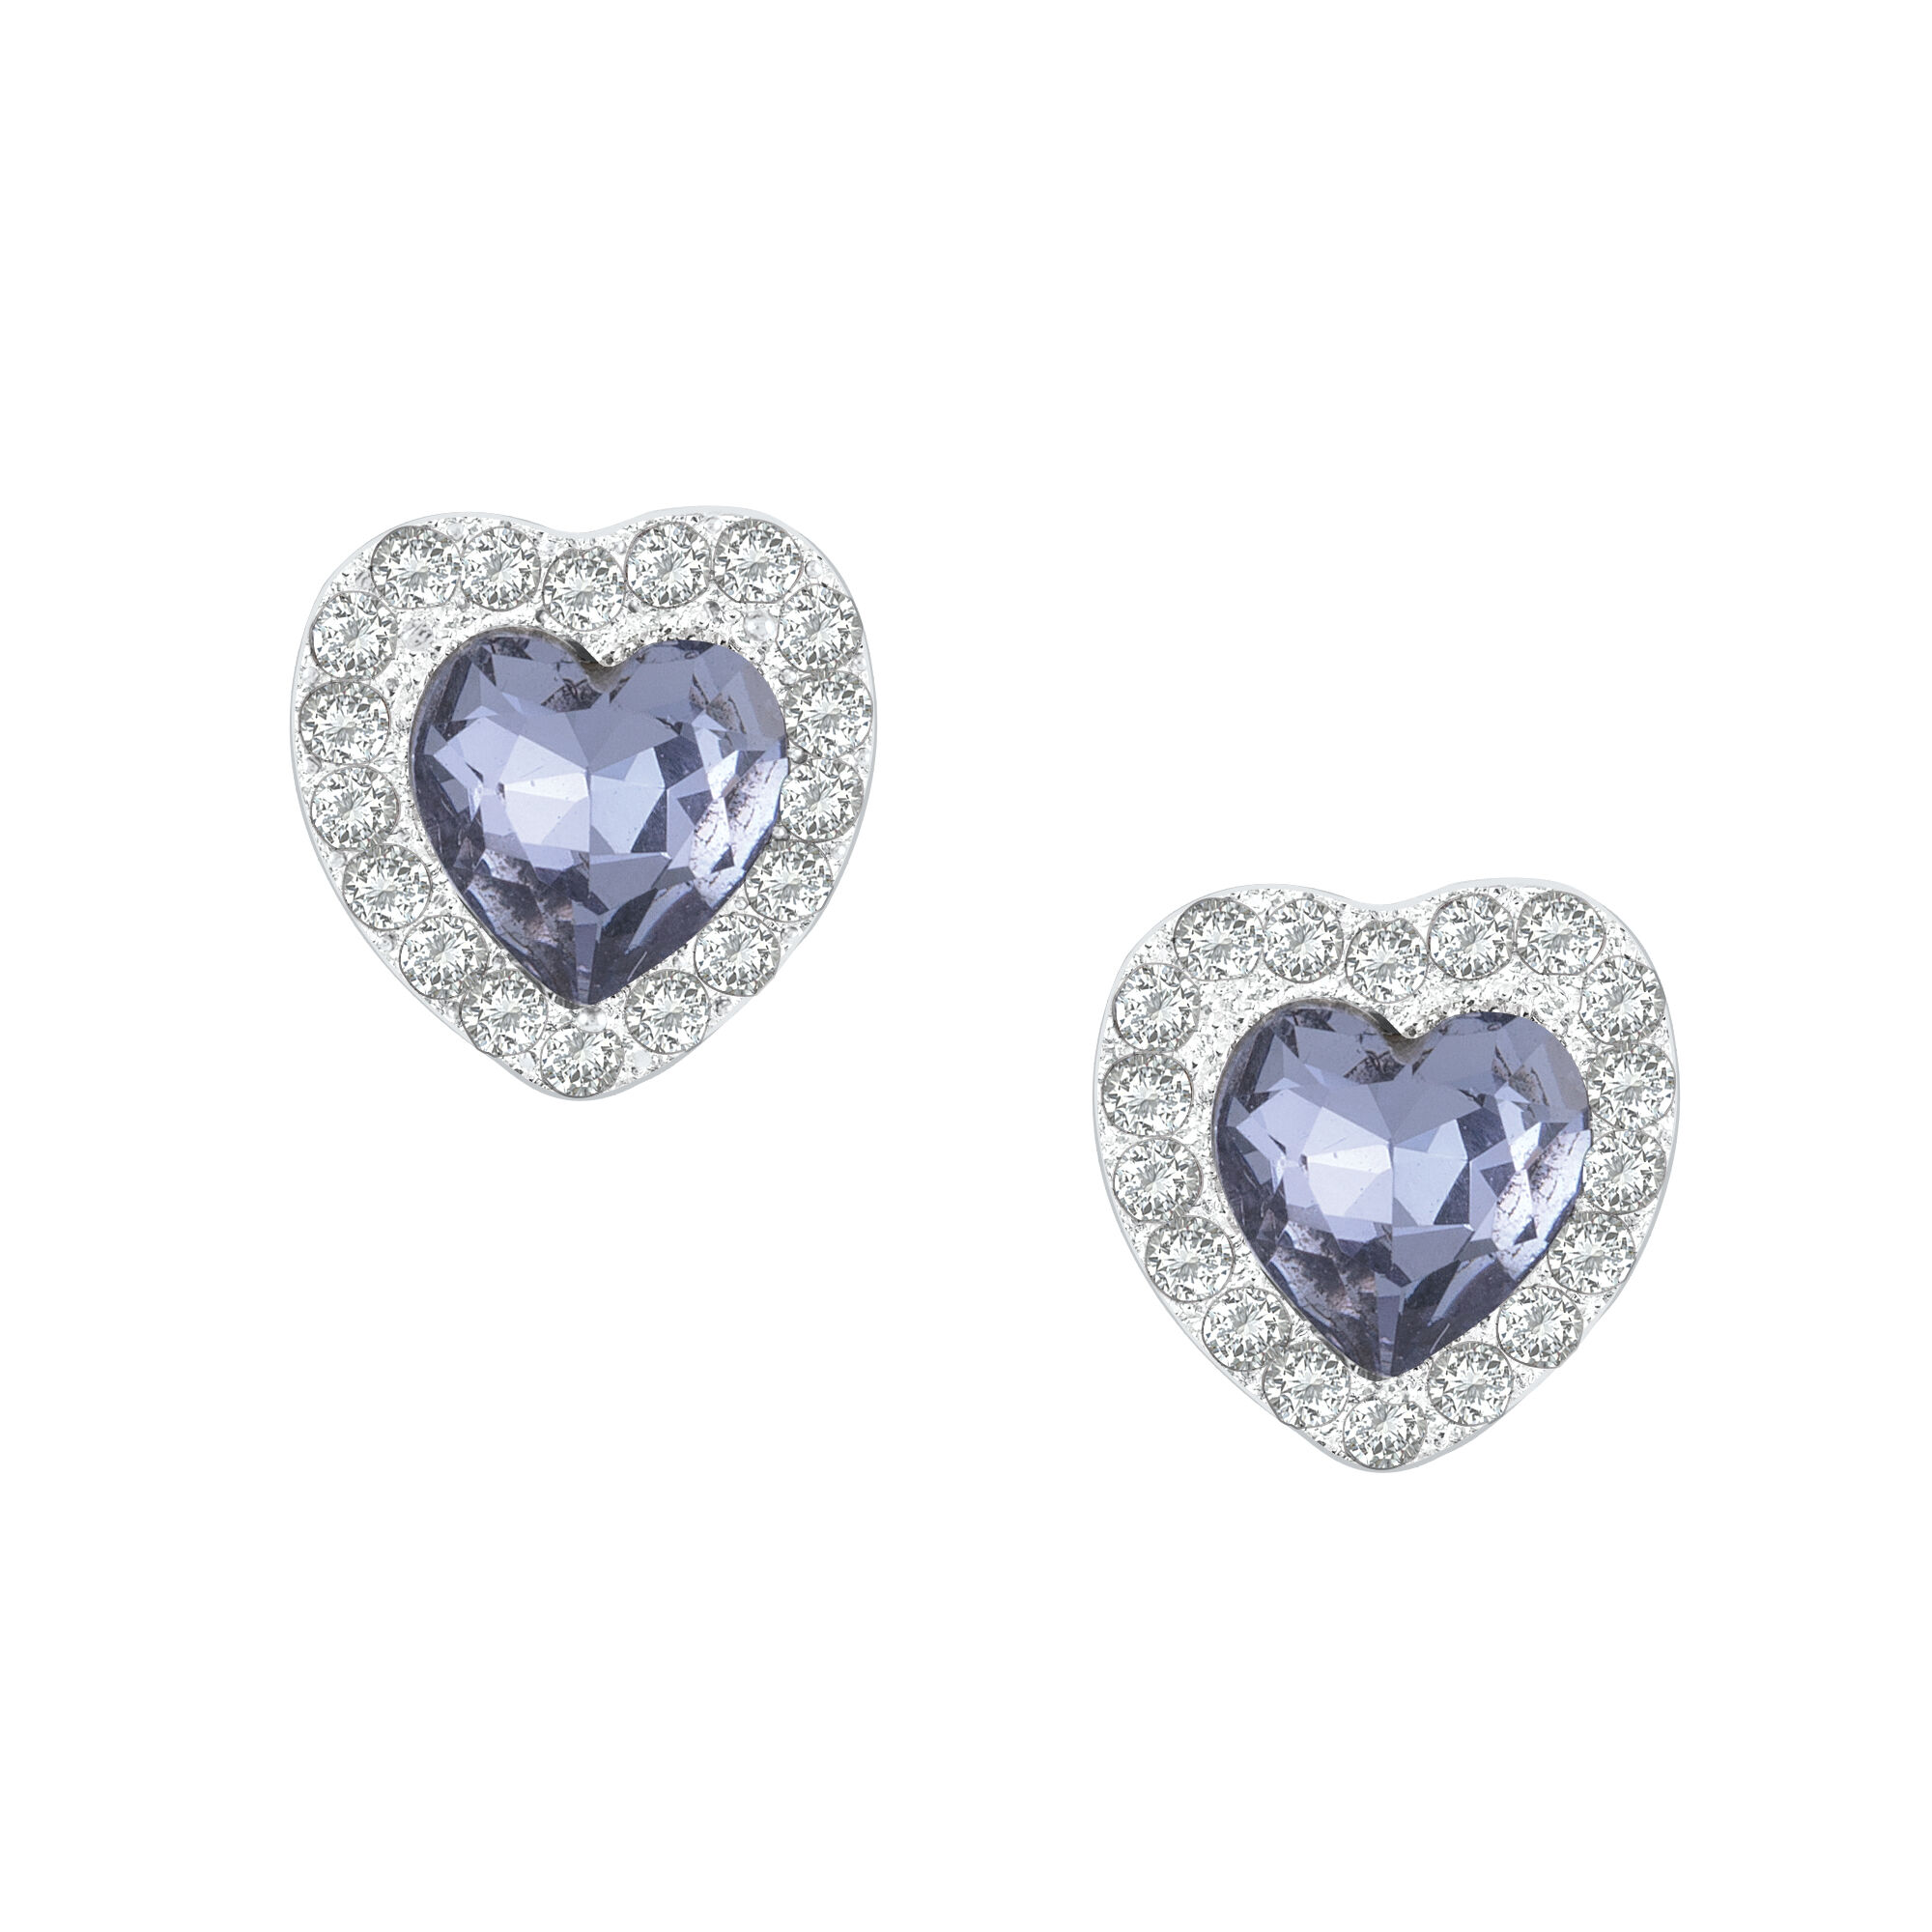 Treasures of the Heart Earrings & Jewelry Box Set